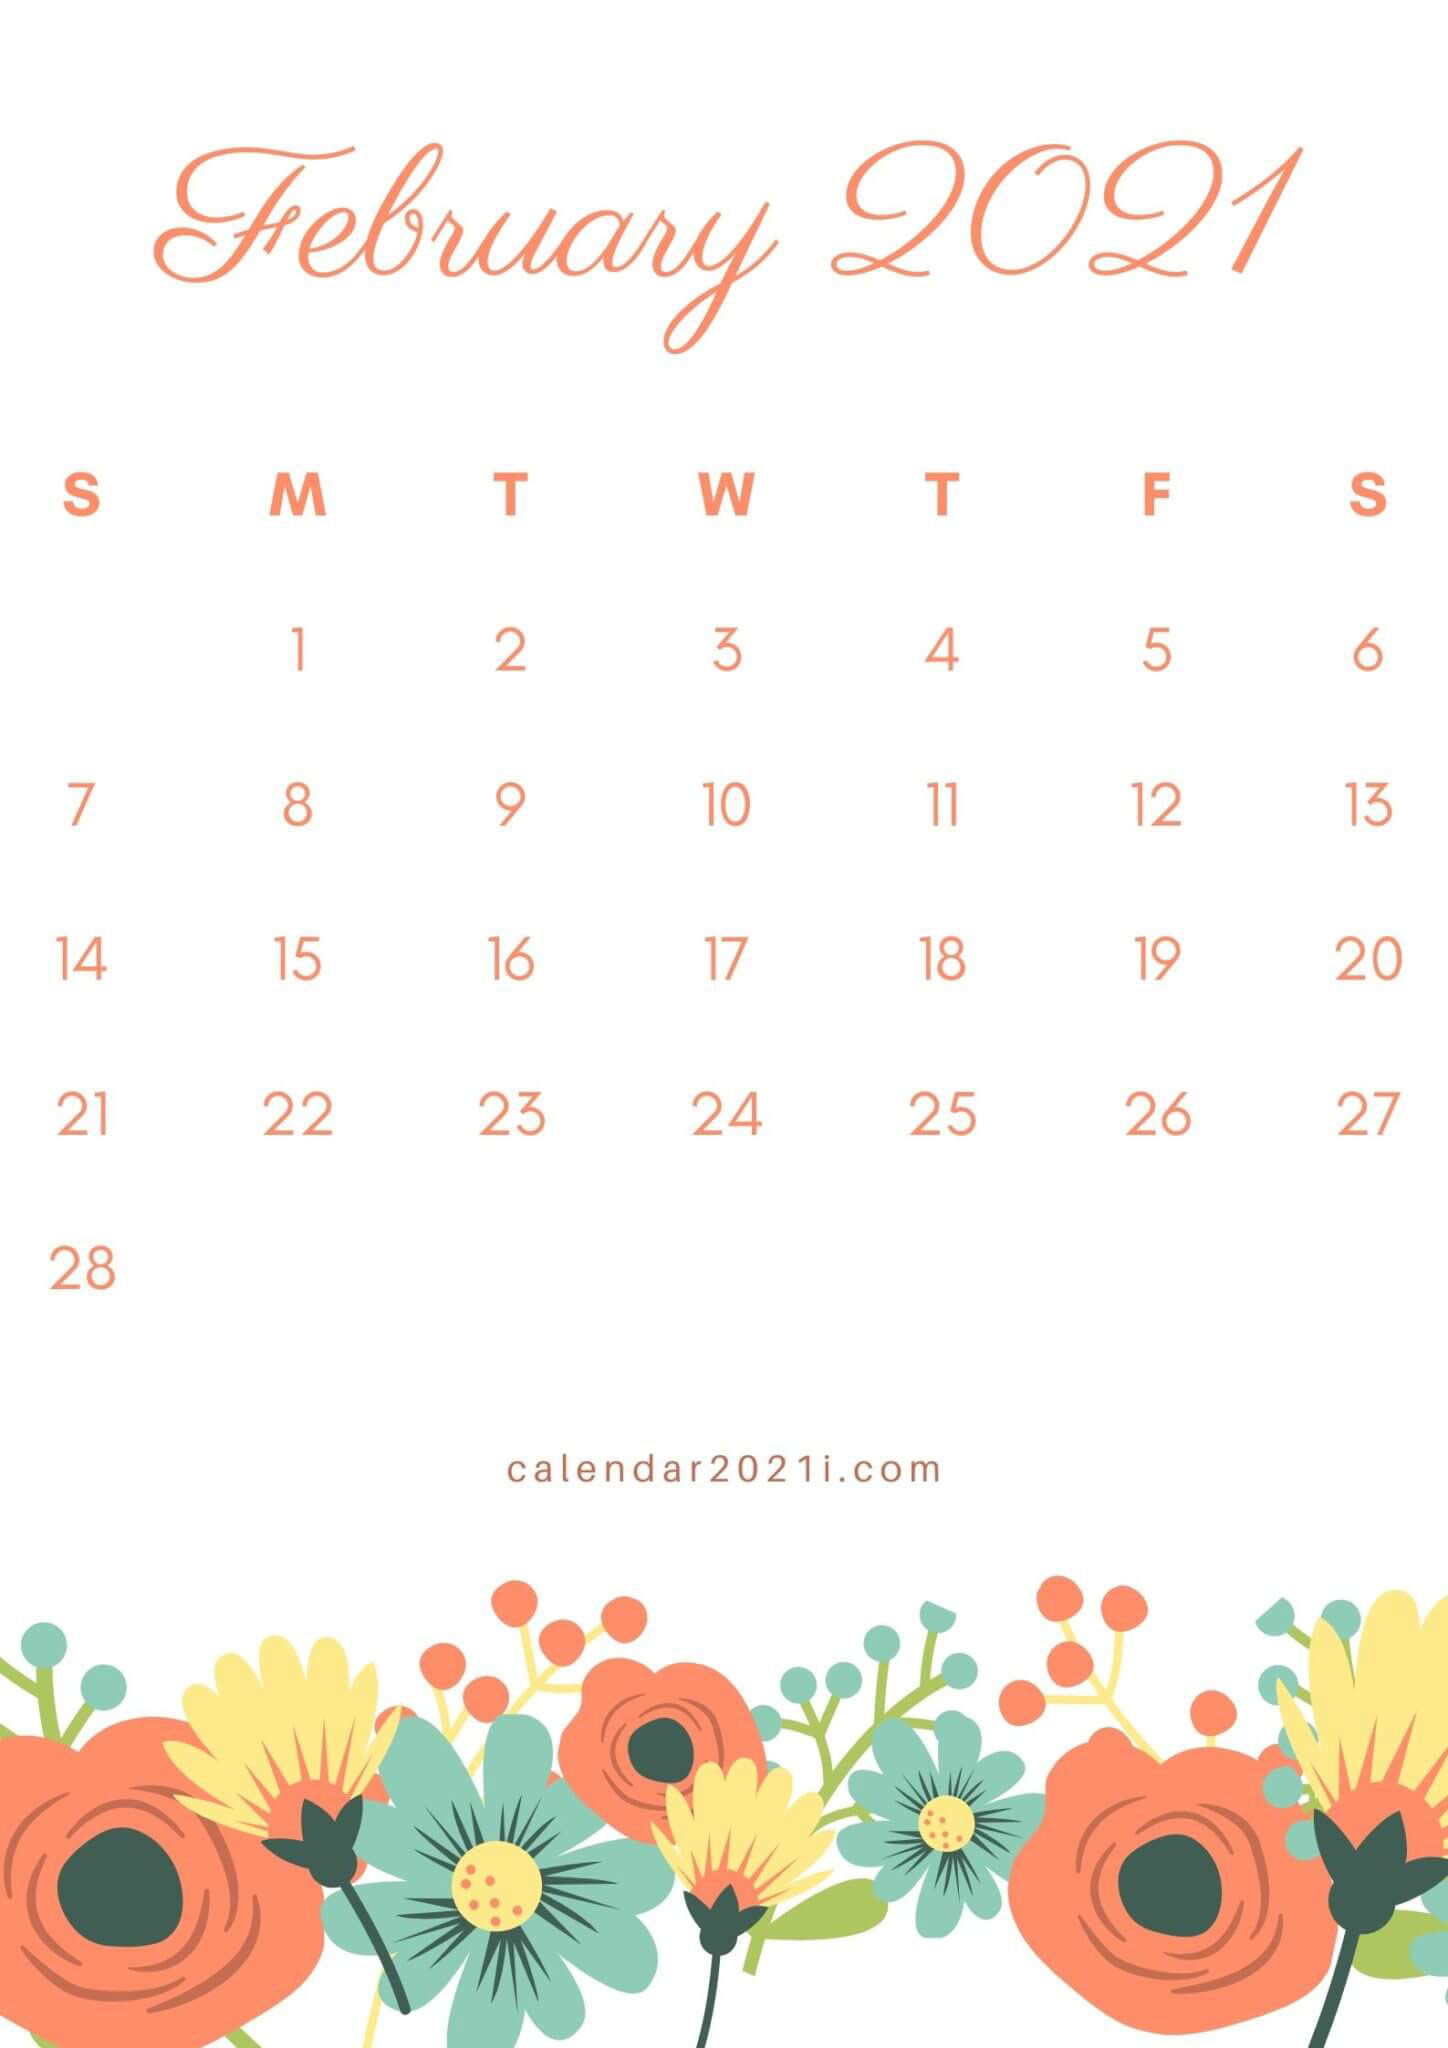 February 2021 calendar wallpaper